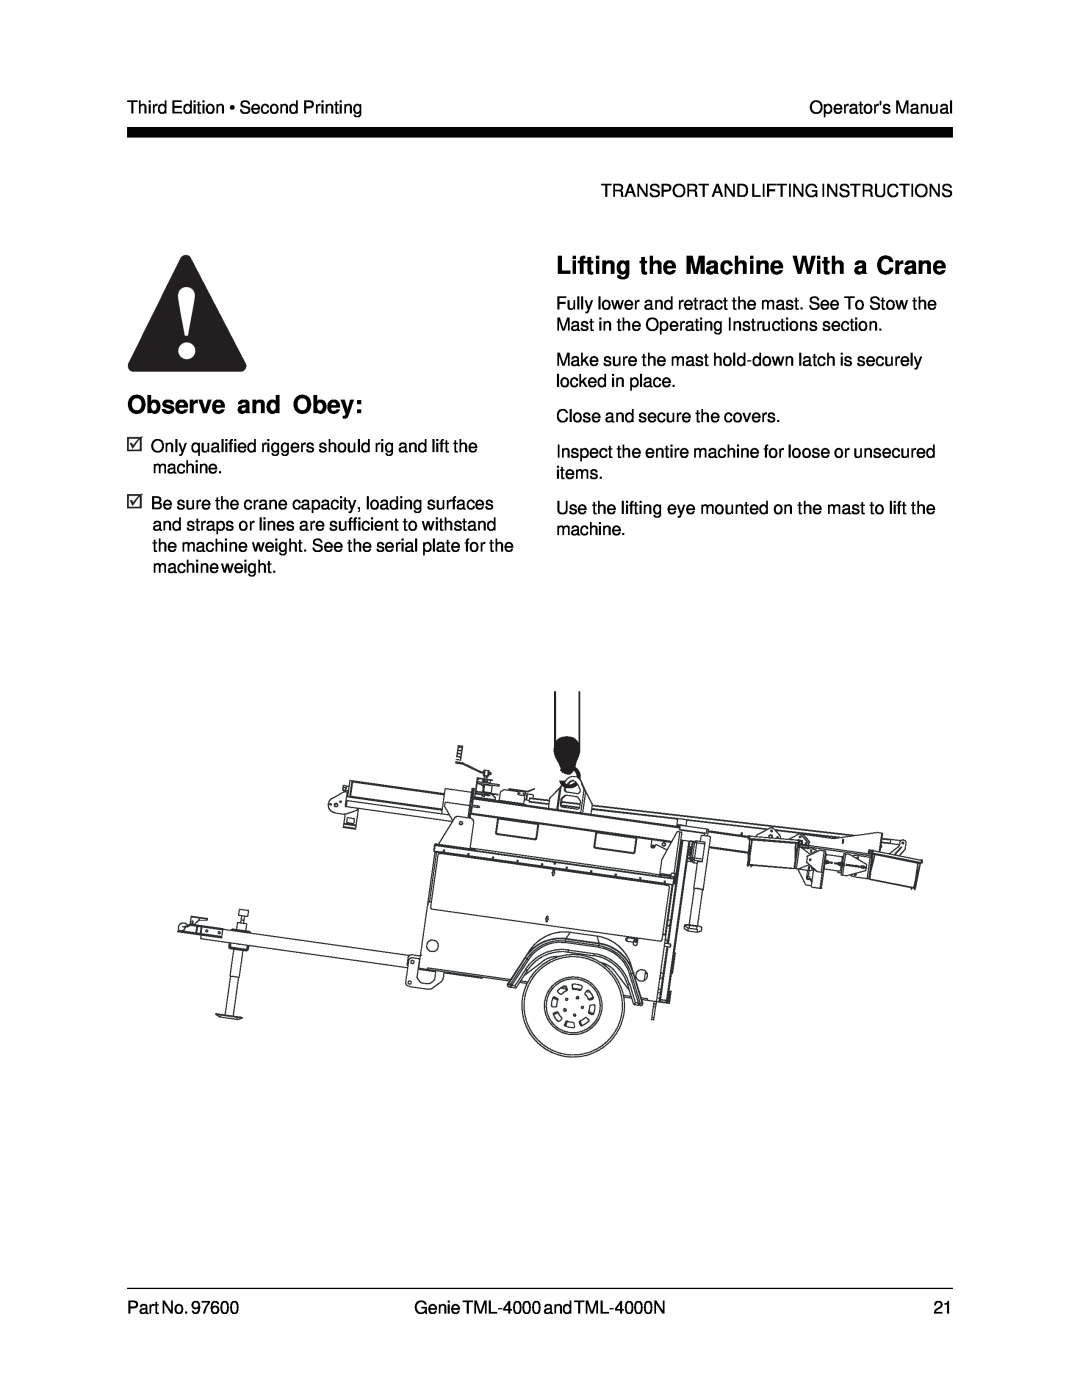 Genie TML-4000N manual Lifting the Machine With a Crane, Observe and Obey 